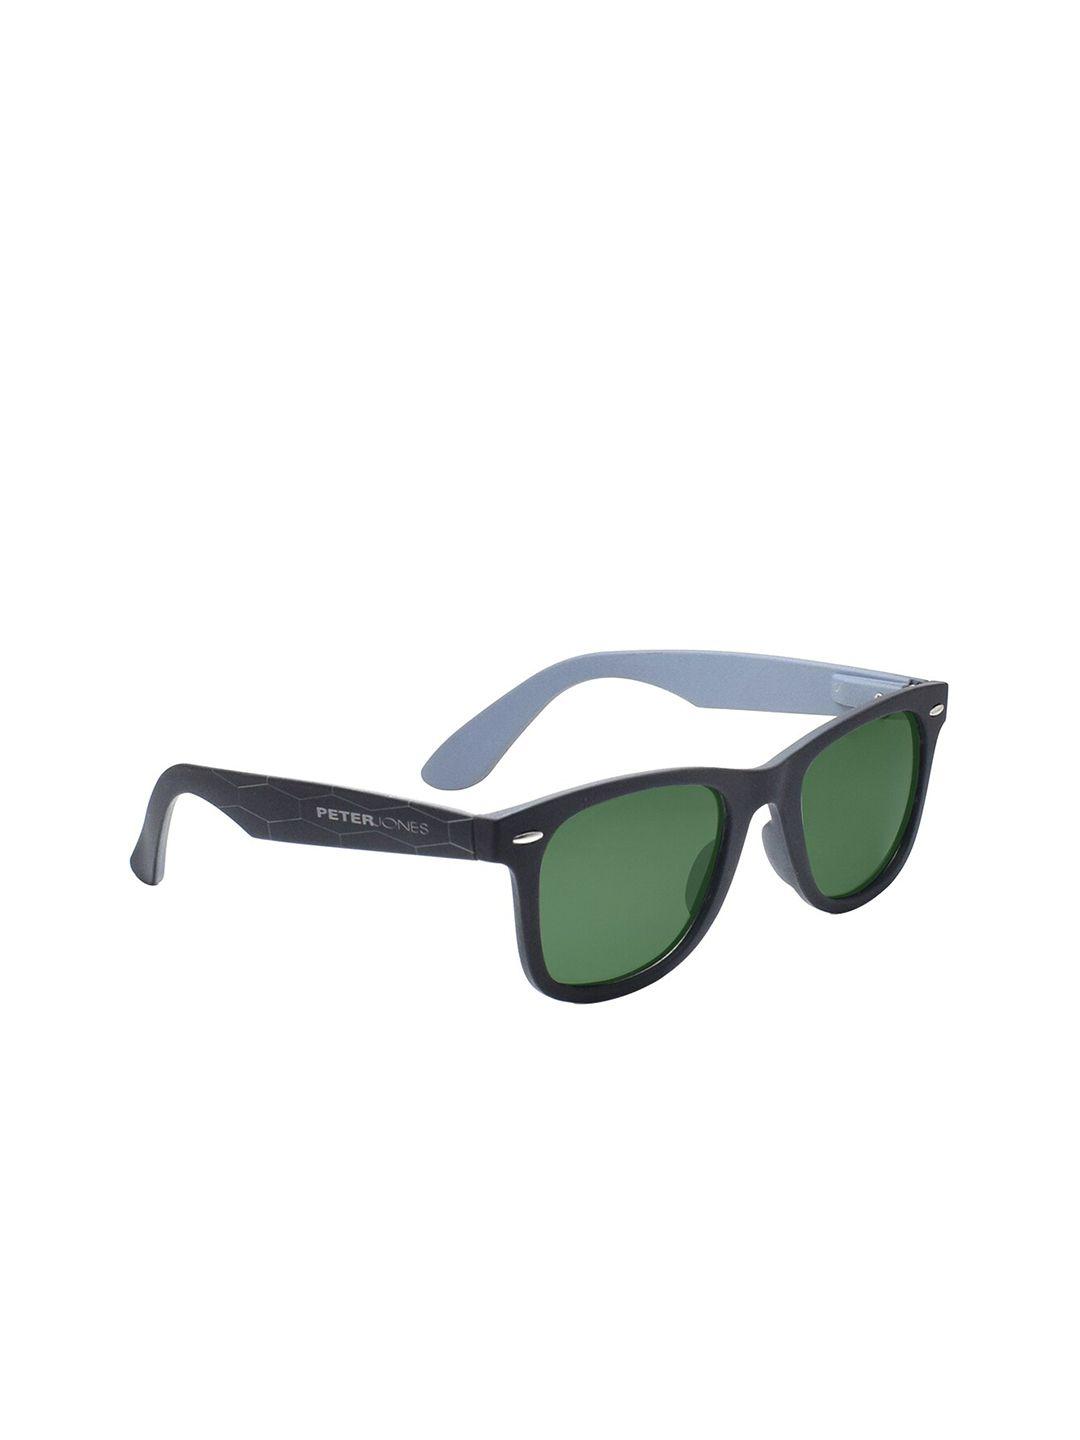 peter jones eyewear unisex green & black square sunglasses with polarised lens po760gb